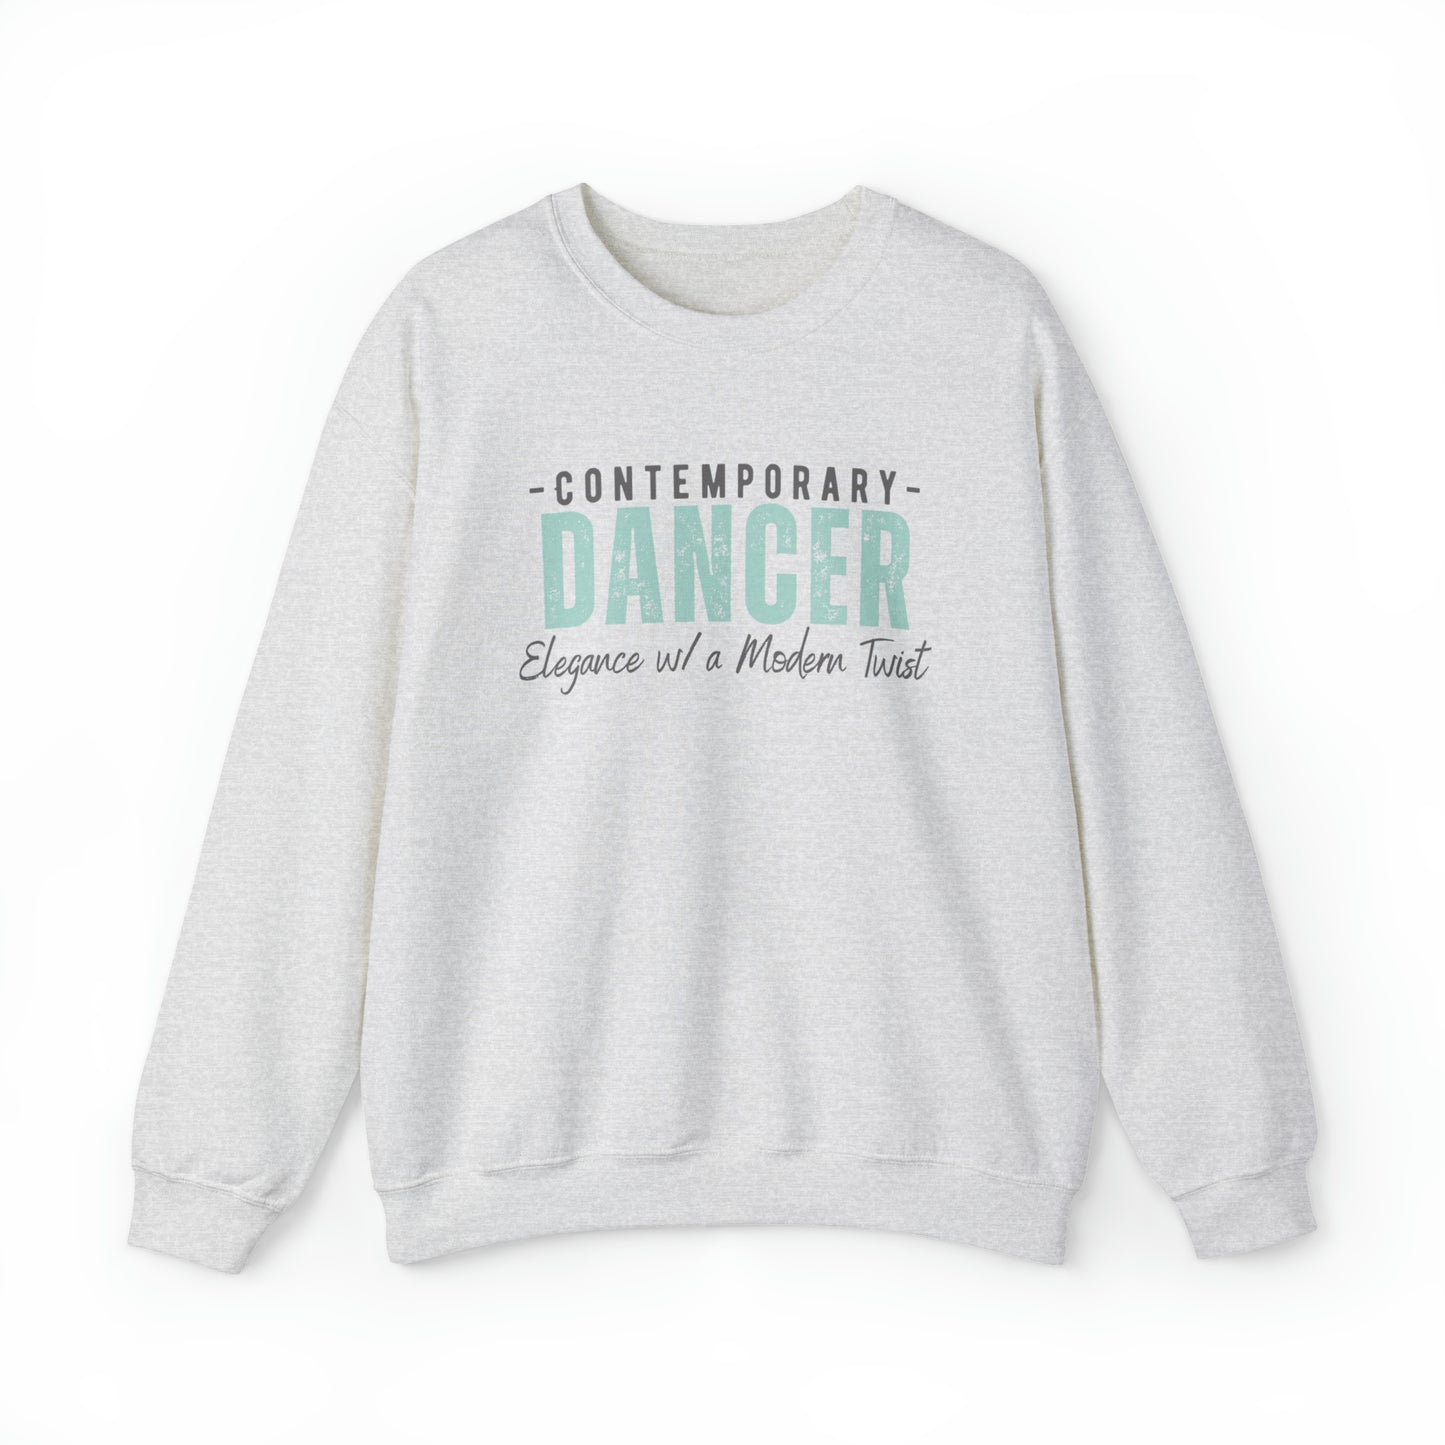 Affirm:: Dance sweatshirt for contemporary dancer